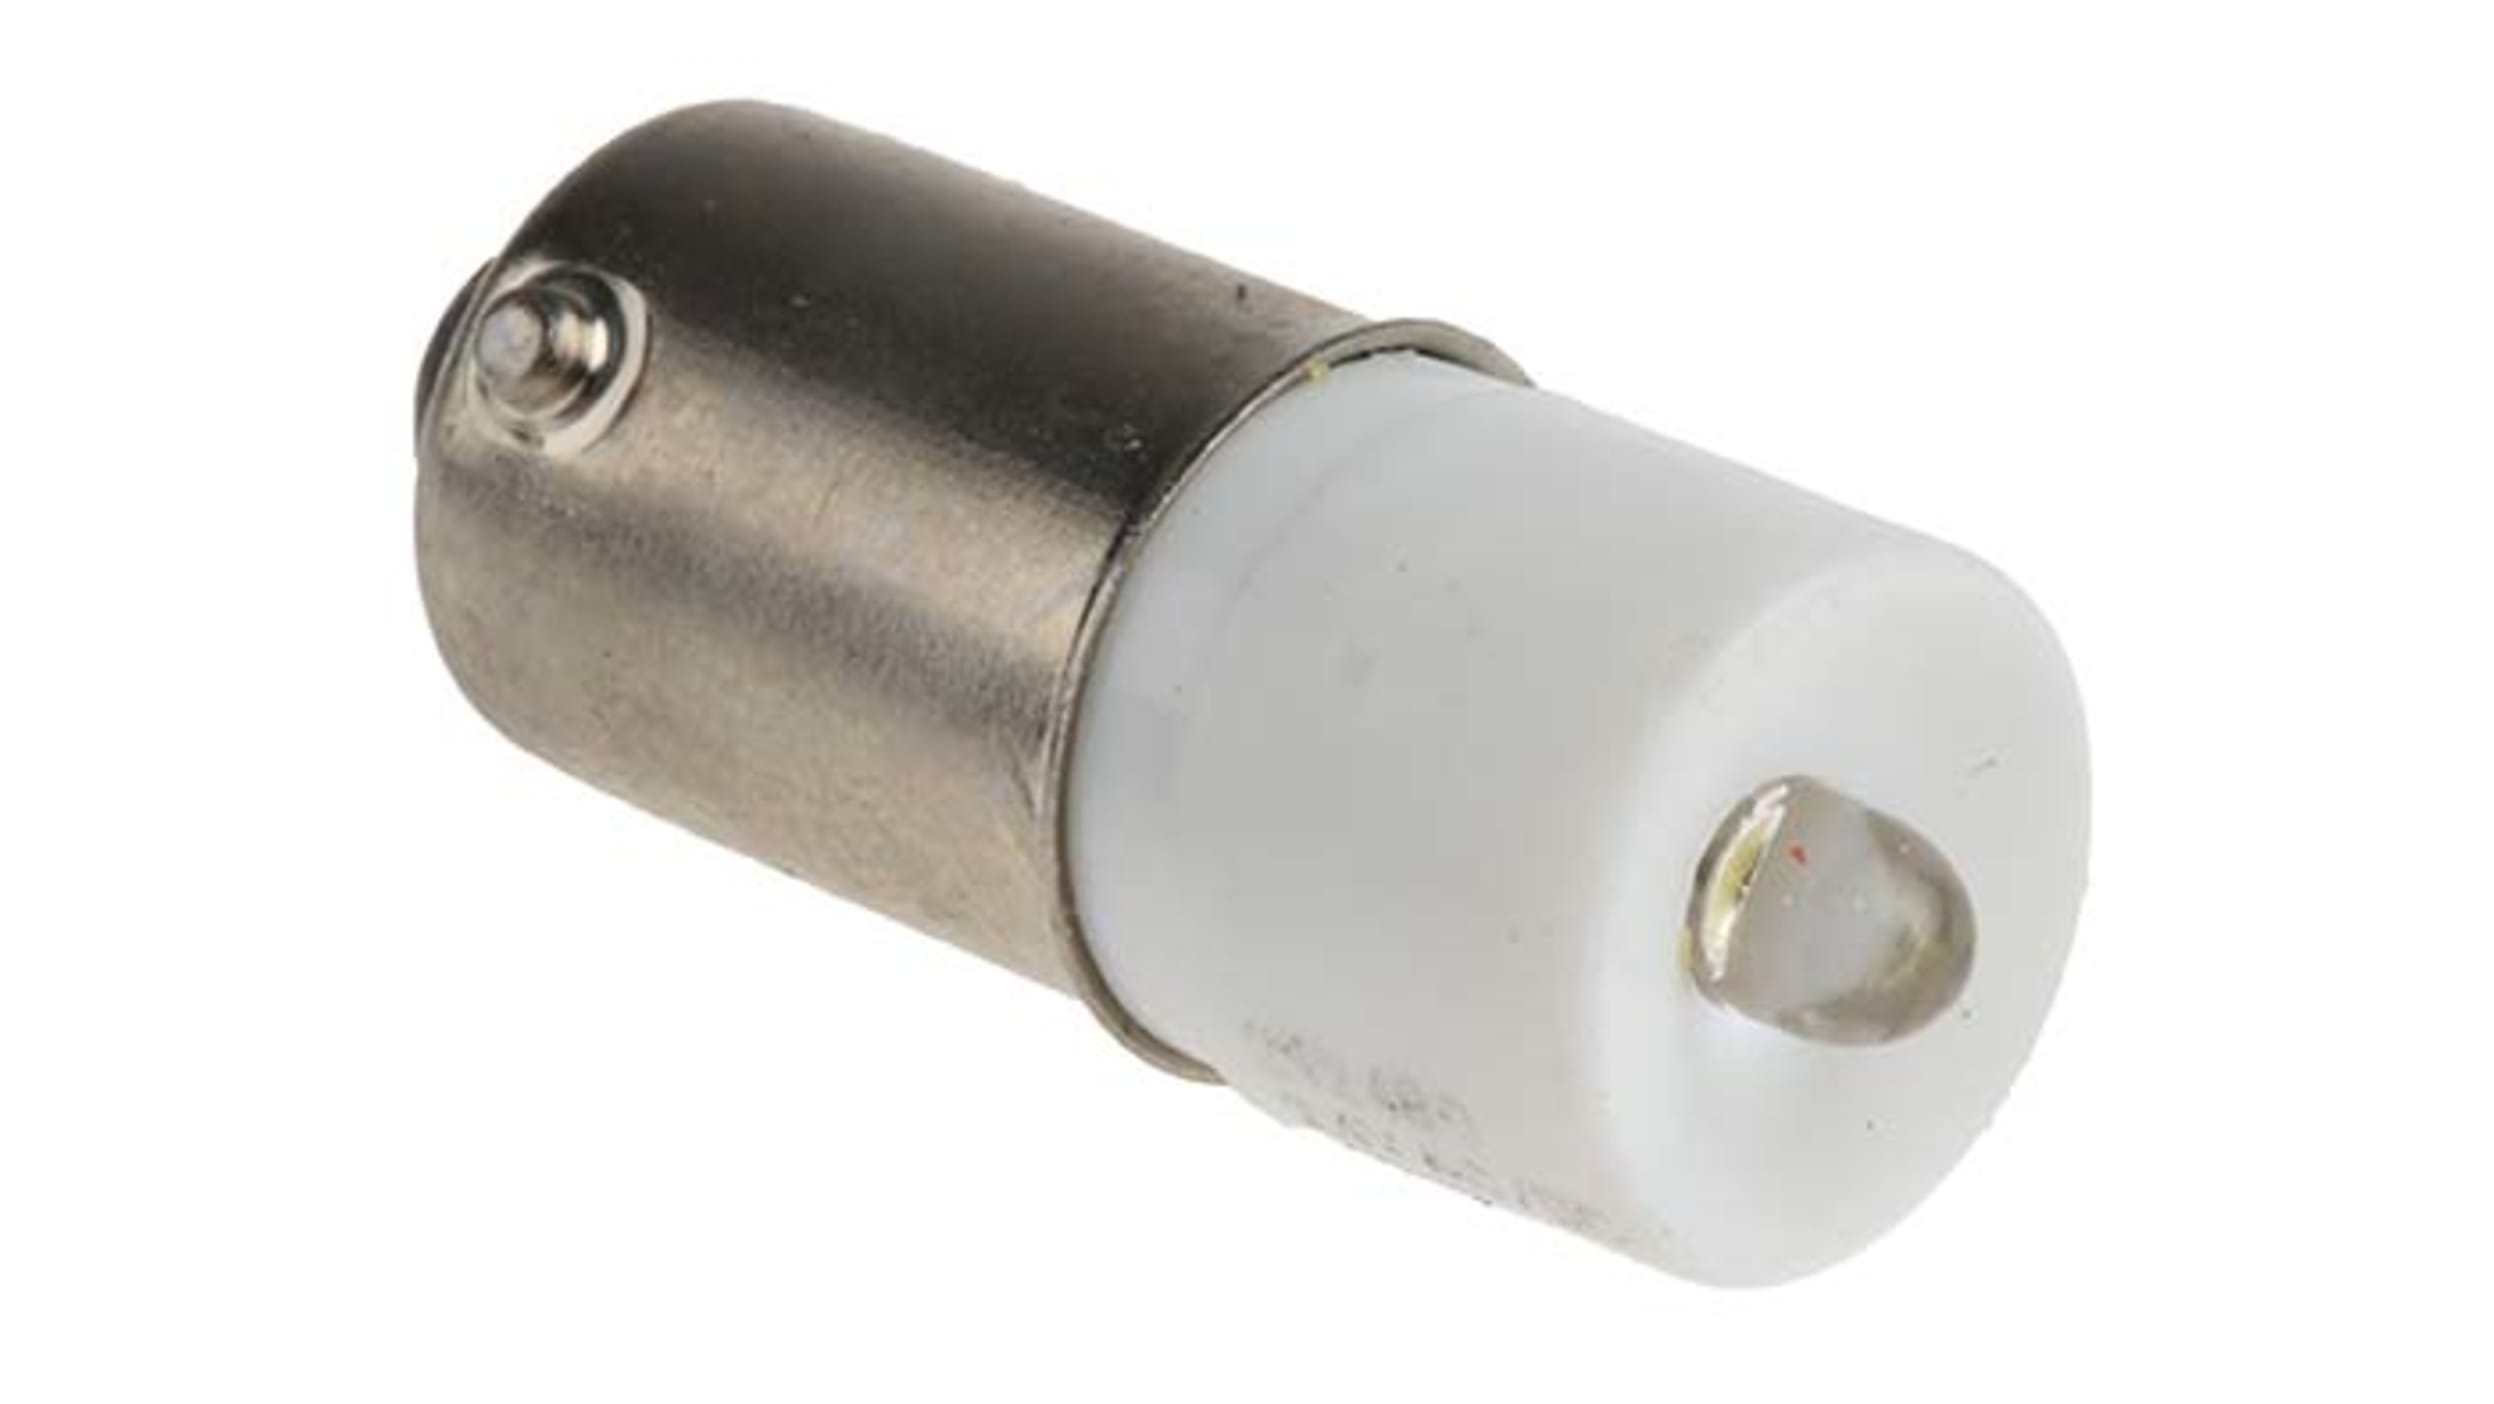 White BA9S LED Instrument Panel Light Bulb 3-2835-SMD 12V Fit 1998-200 –  Dynamic Performance Tuning